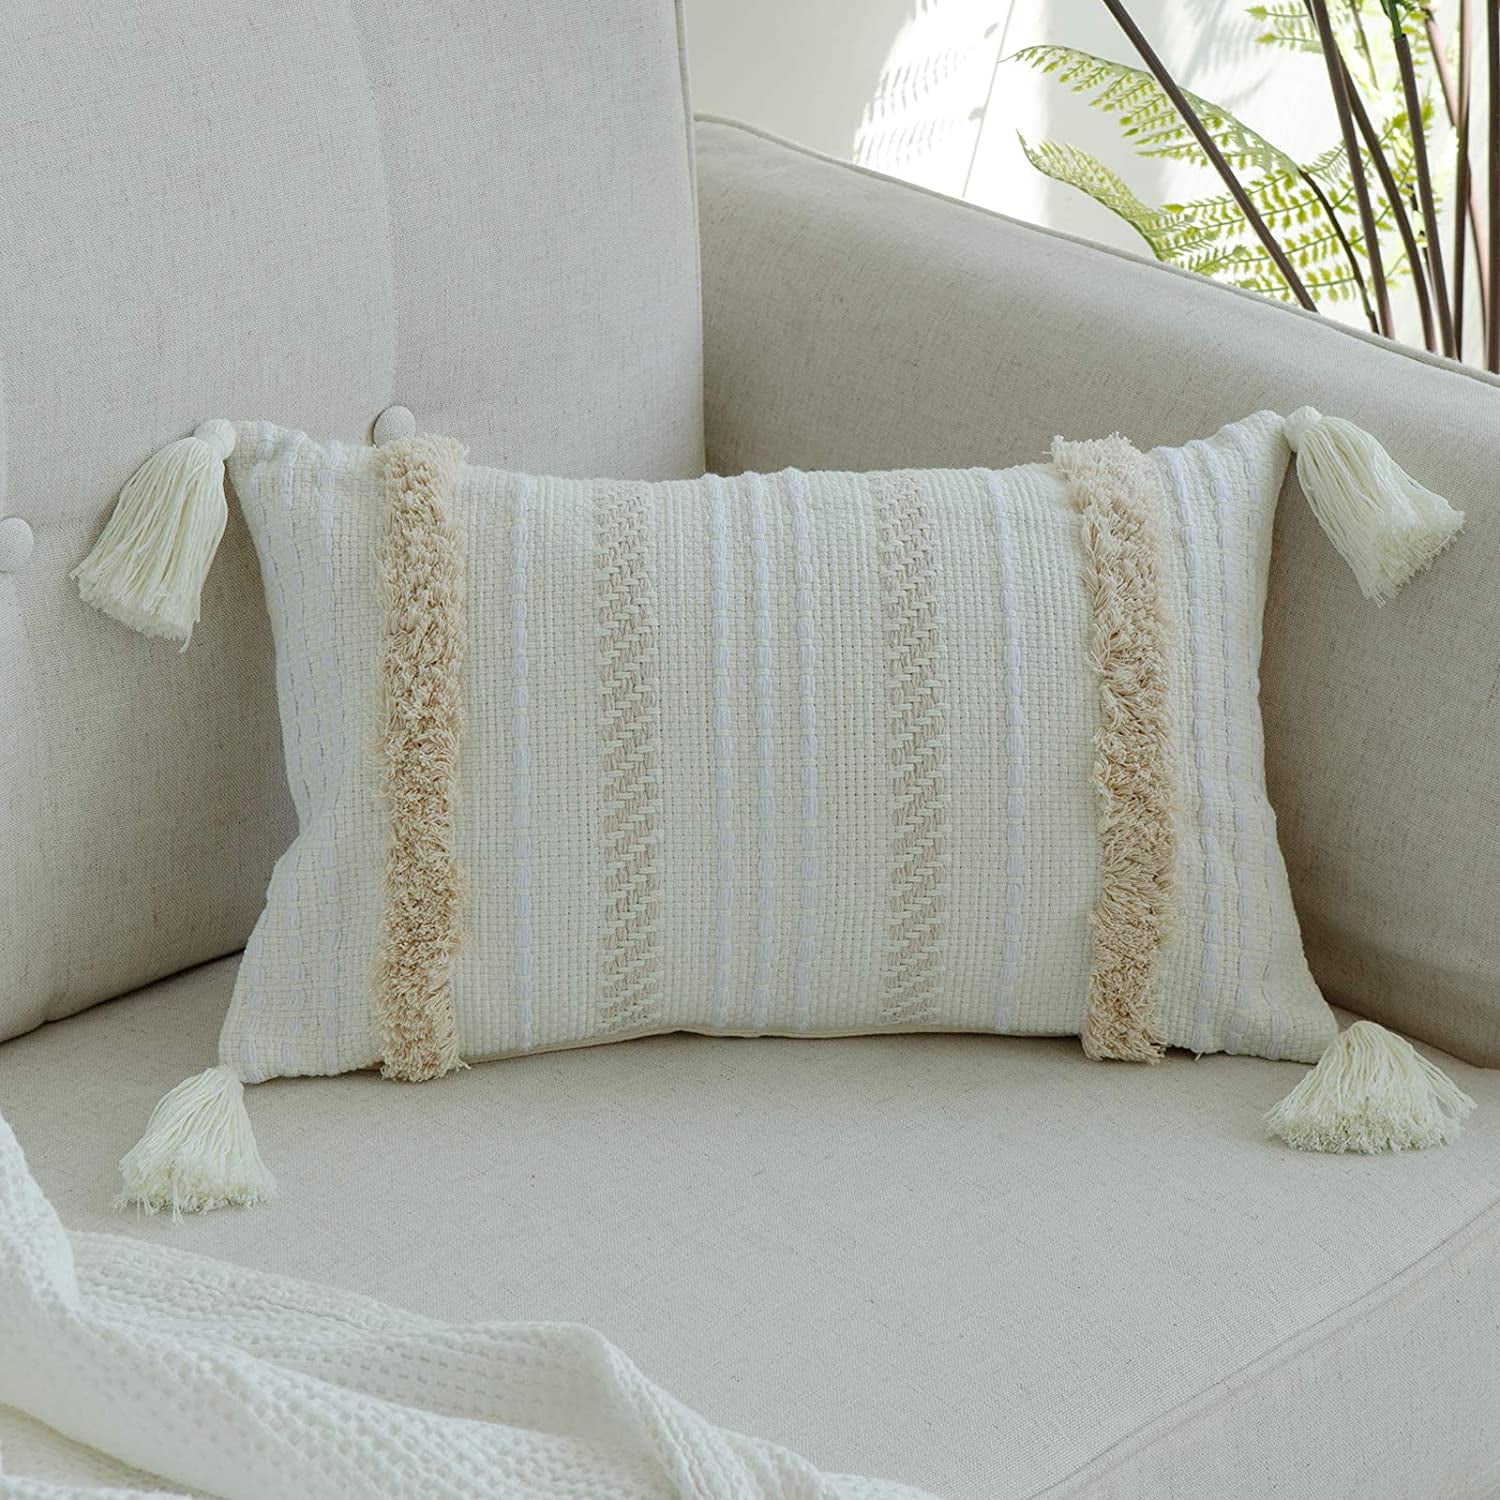 Deconovo Boho Decorative Tufted Throw Pillow Cover Cotton Linen Decorative Pill 